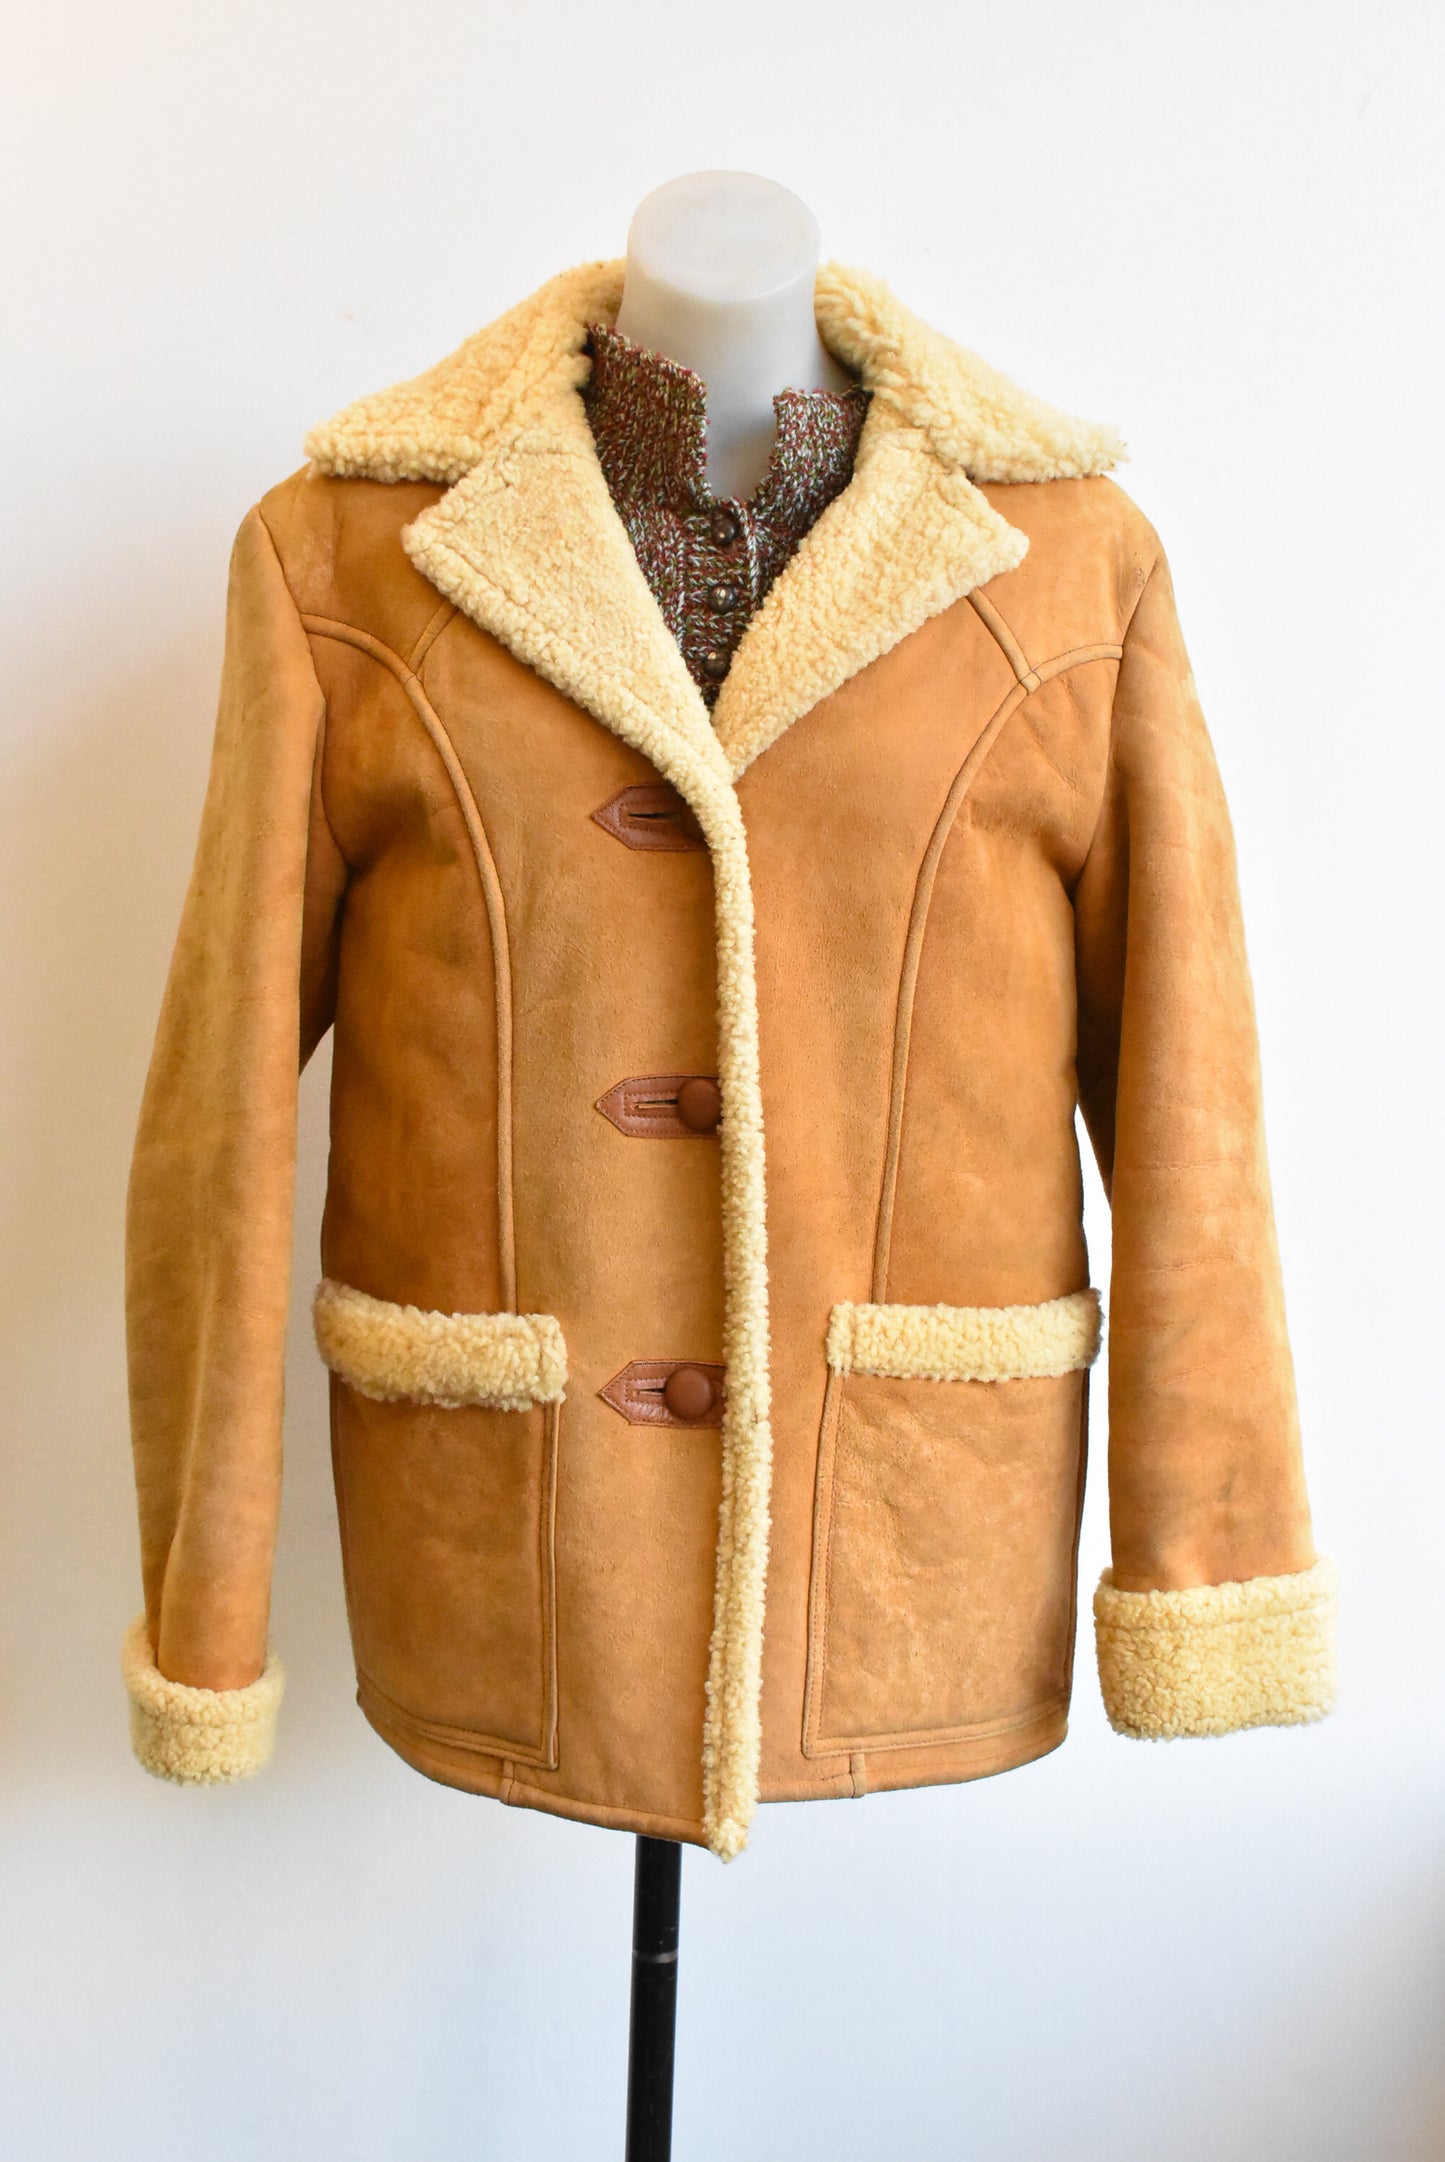 Brown suede and wool jacket